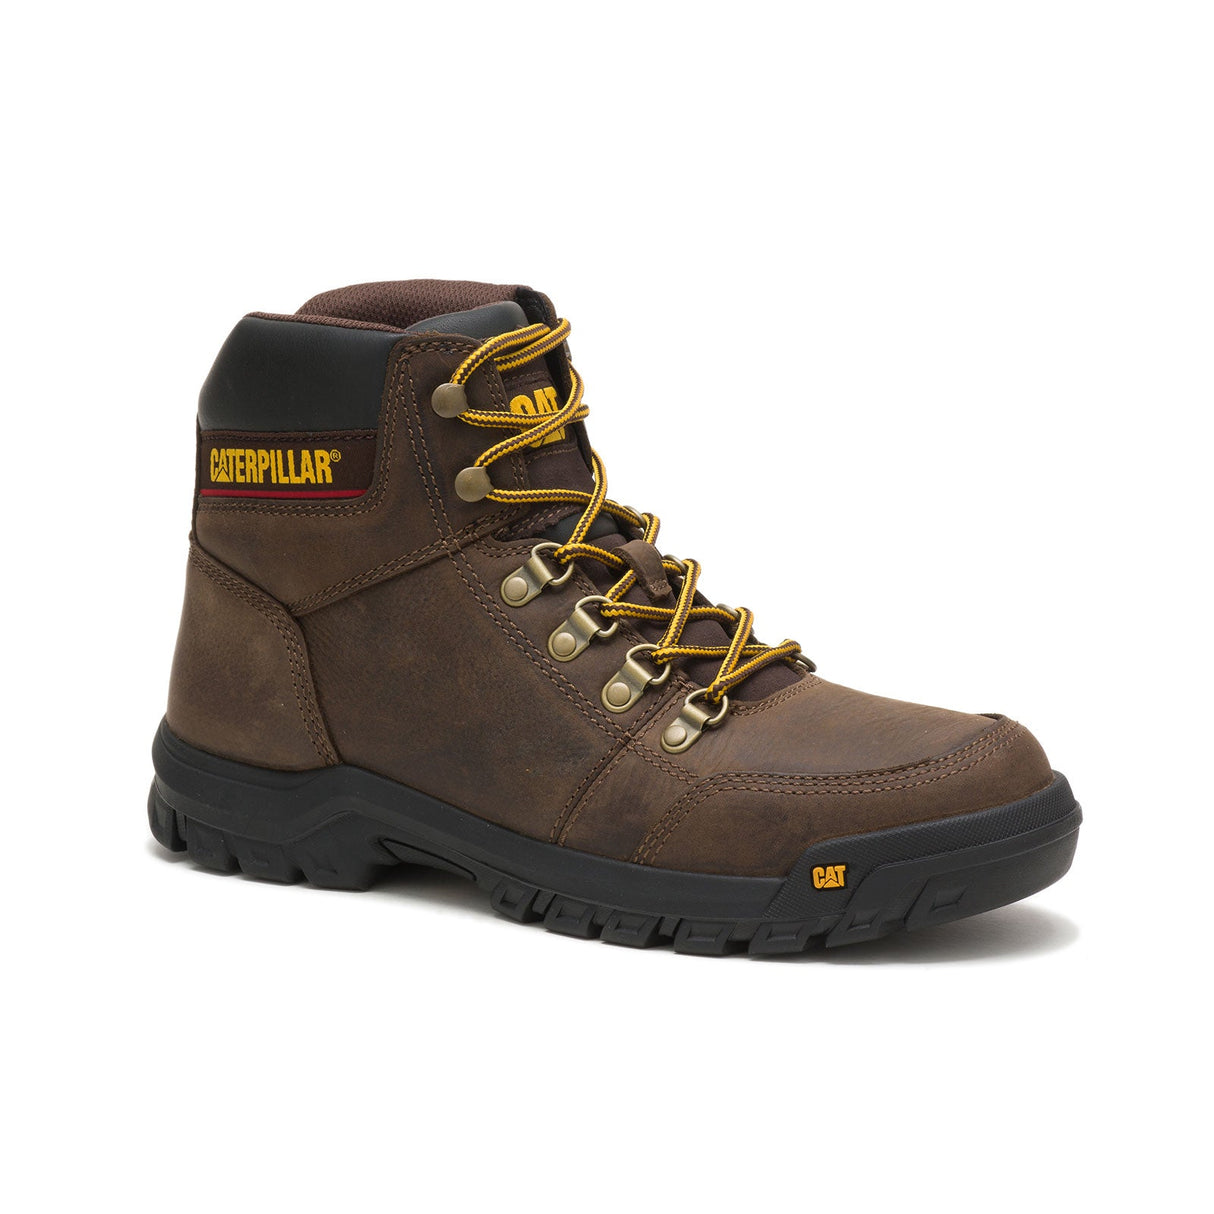 Caterpillar Outline Men's Work Boots P74087-2